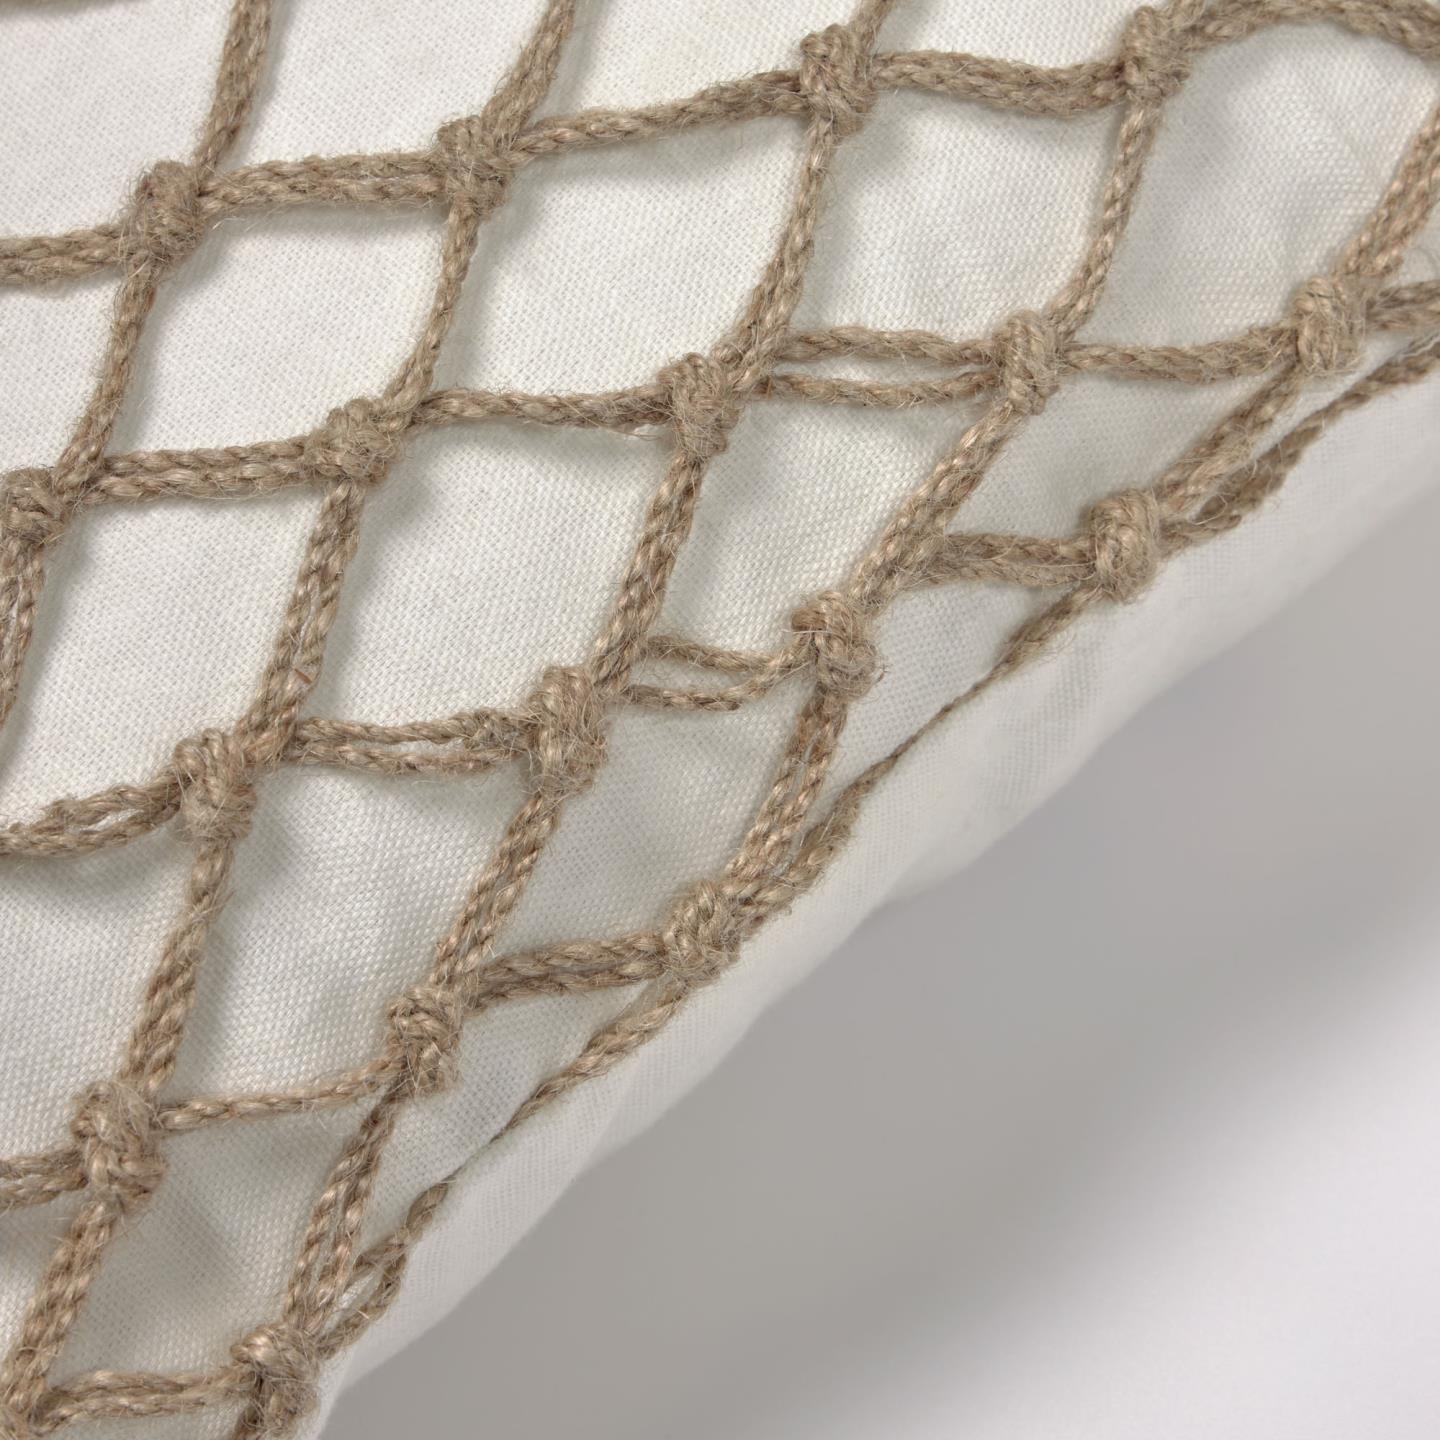 La Forma (ex Julia Grup) Edelma чехол для подушки белый 45 x 45 cm с веревкой из джута